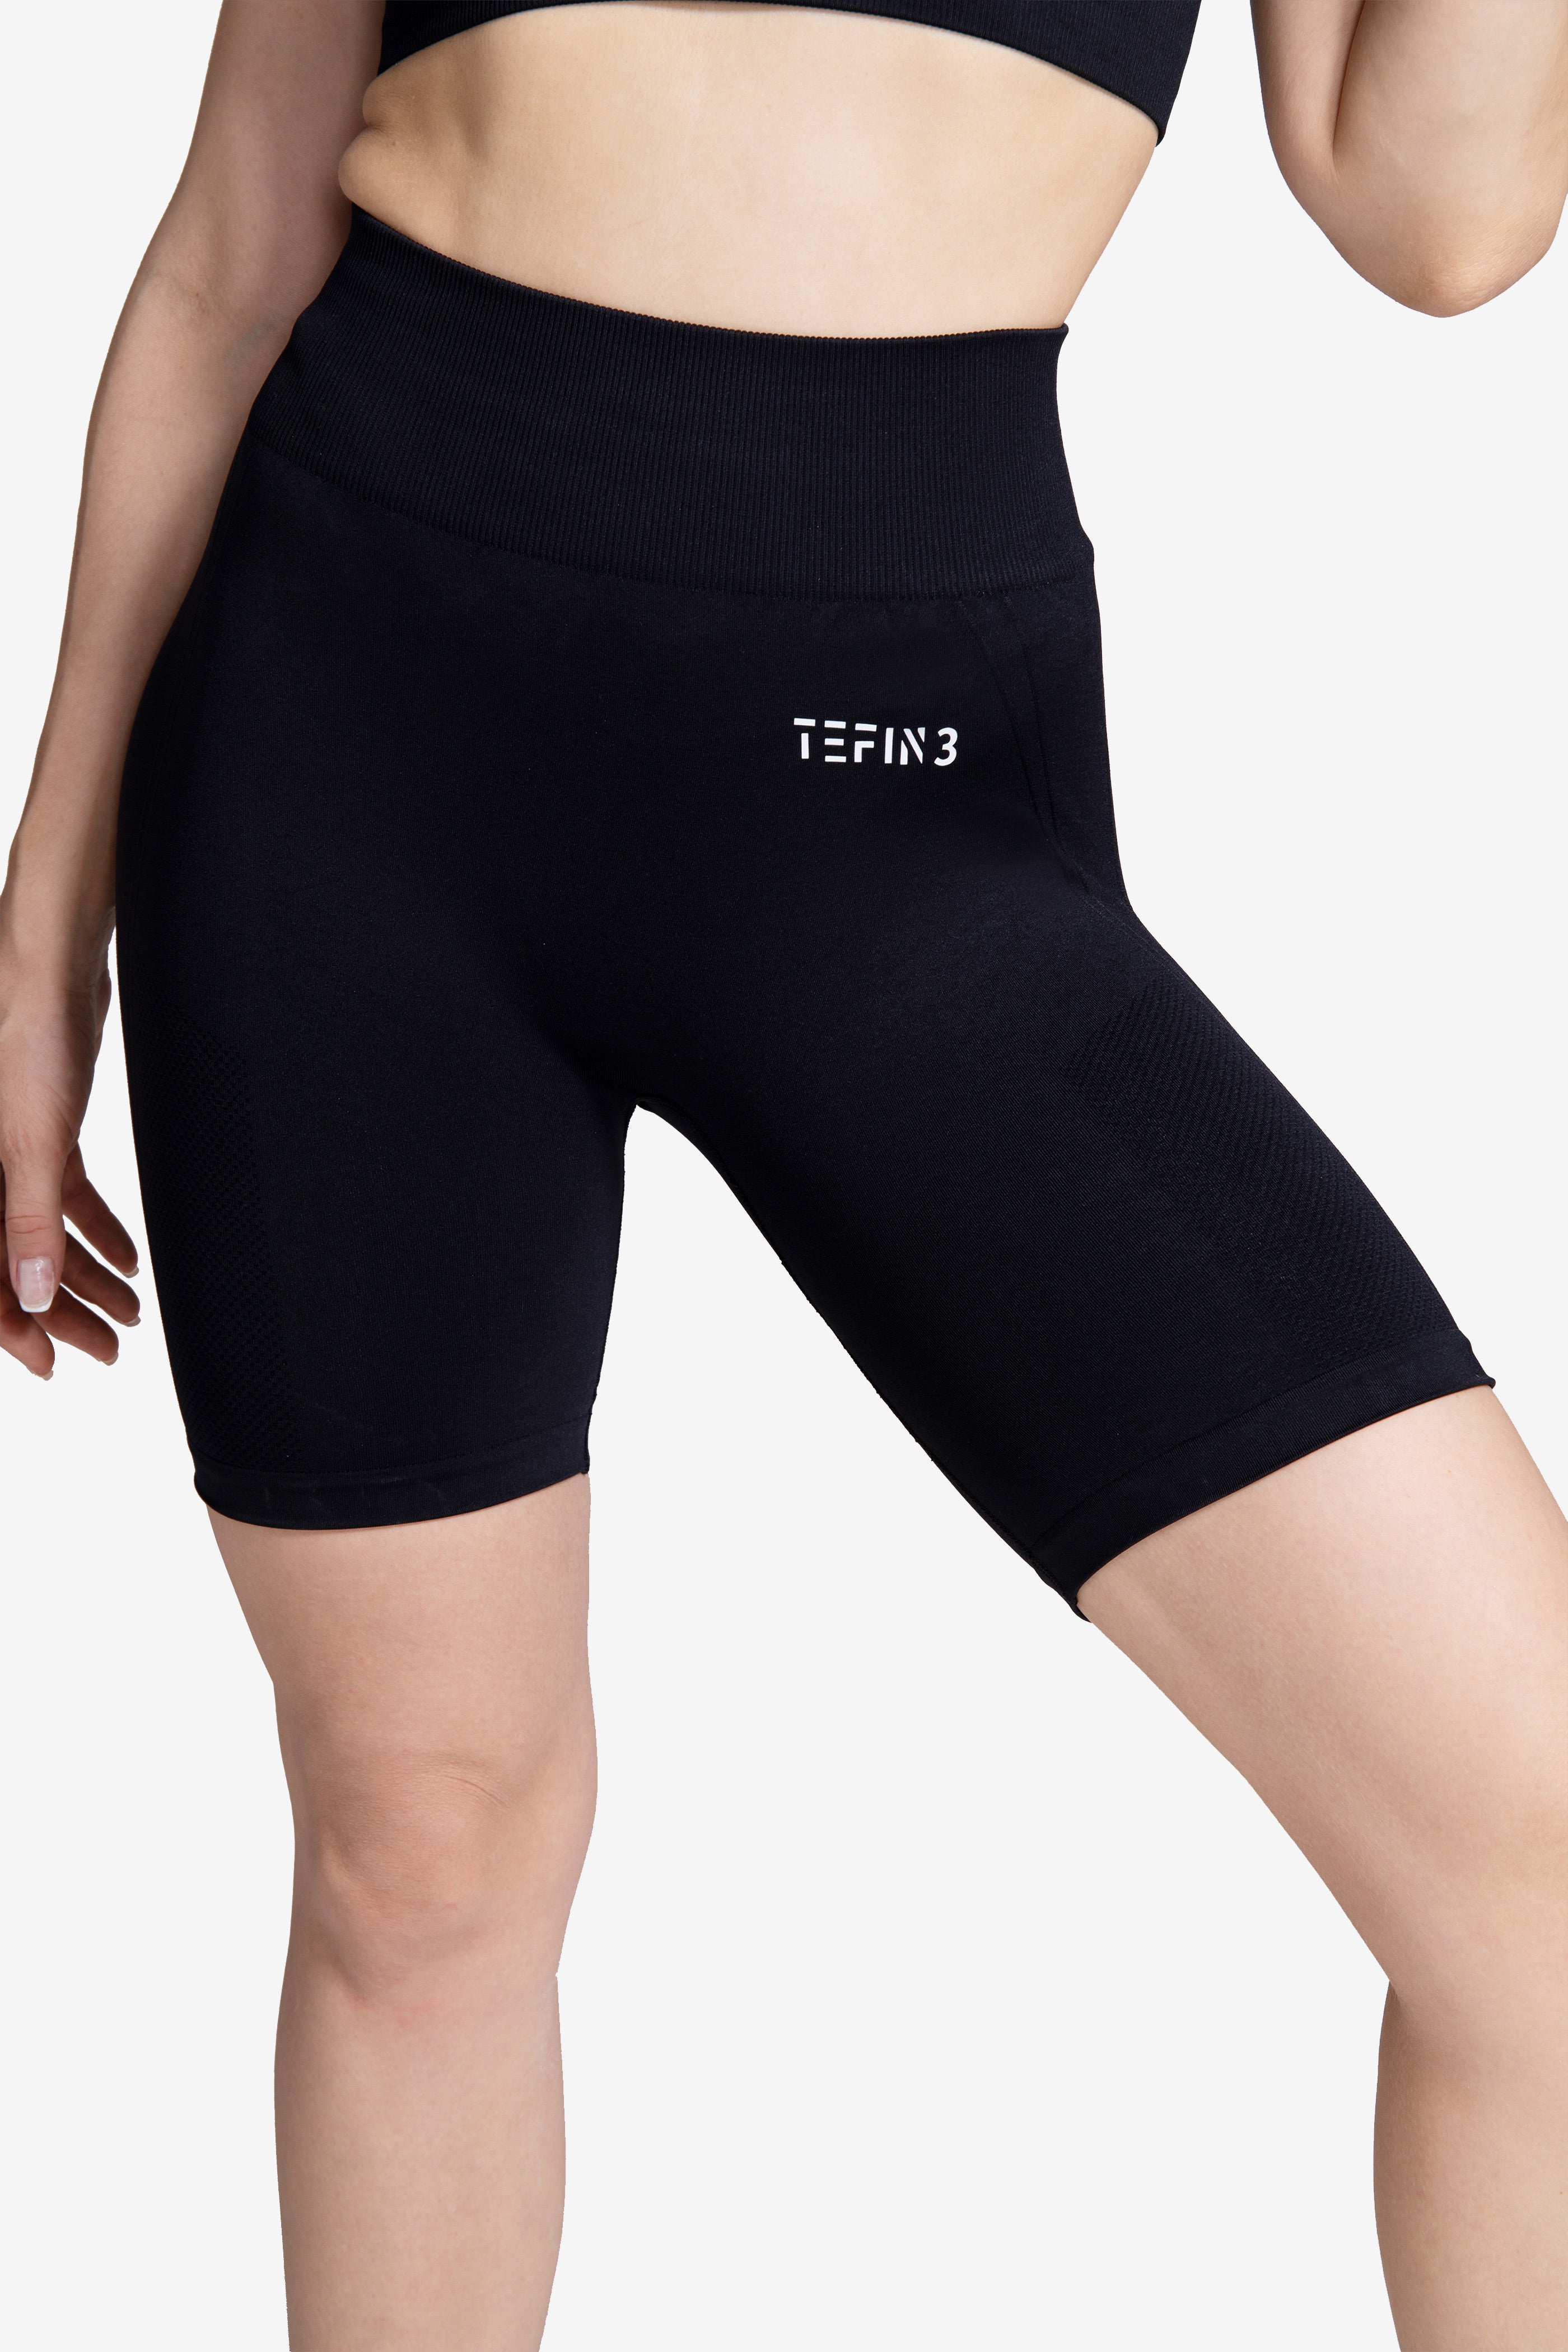 Comfy TEFIN3 Seamless Shorts Black Women Workout